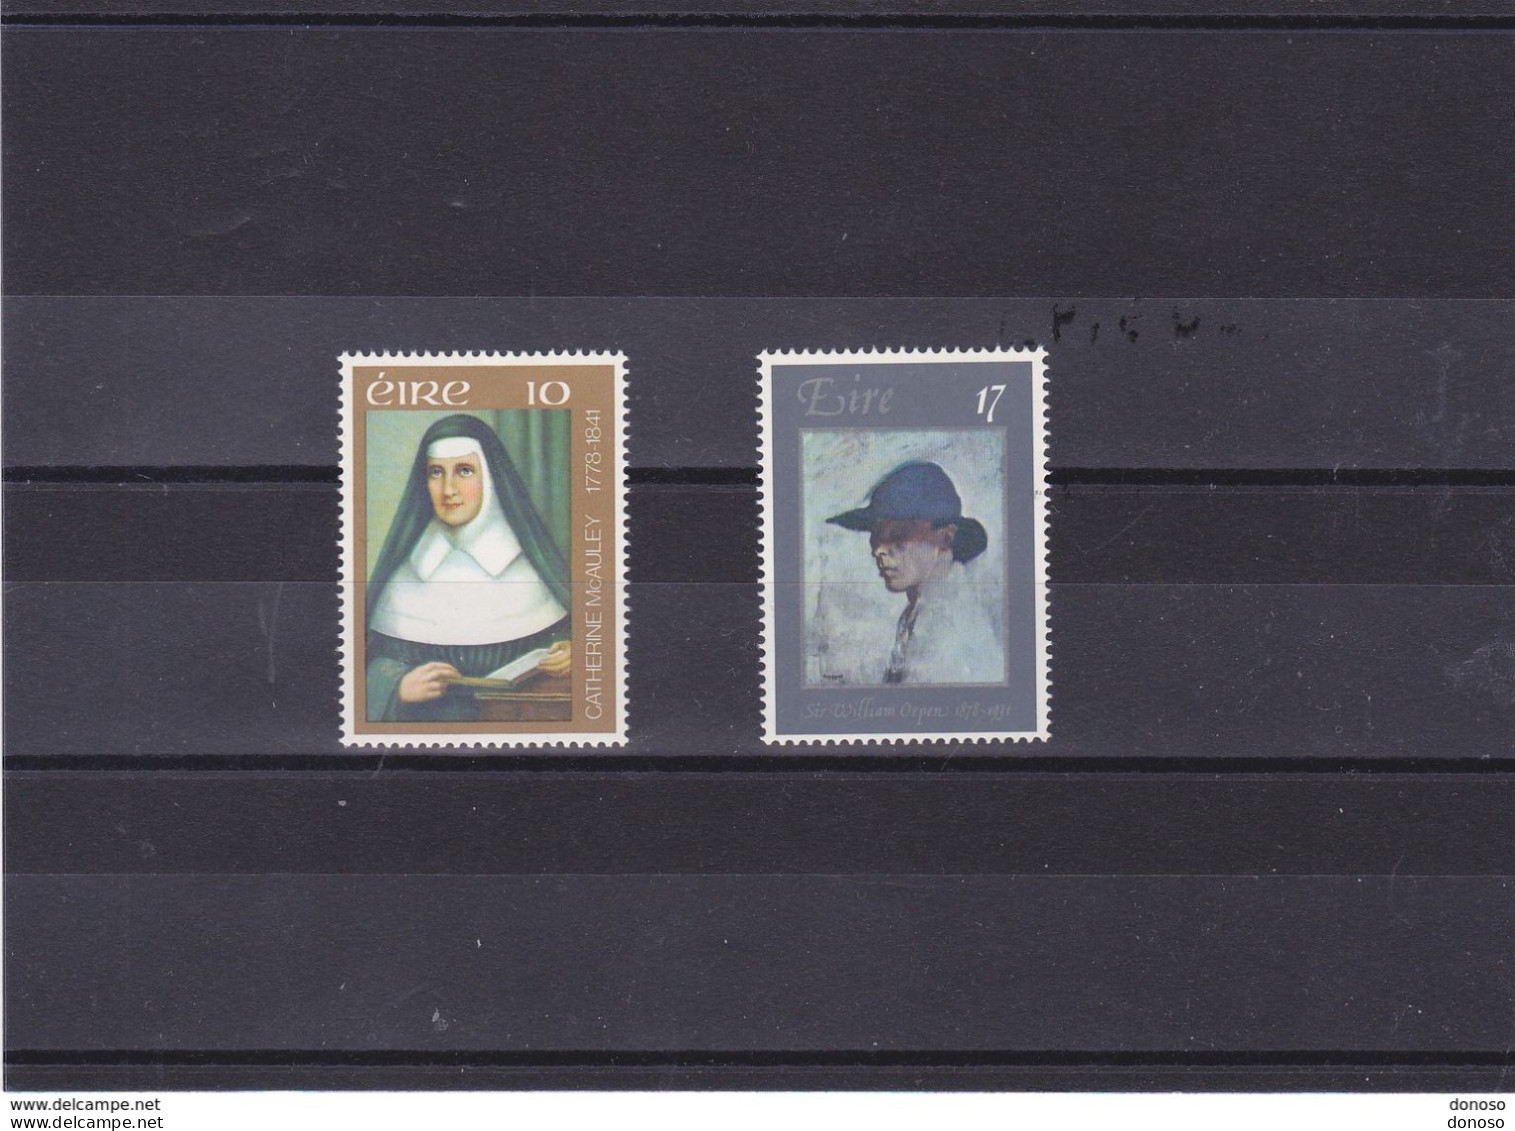 IRLANDE 1978 Yvert 383 + 385, Michel 380 + 382 NEUF** MNH - Unused Stamps